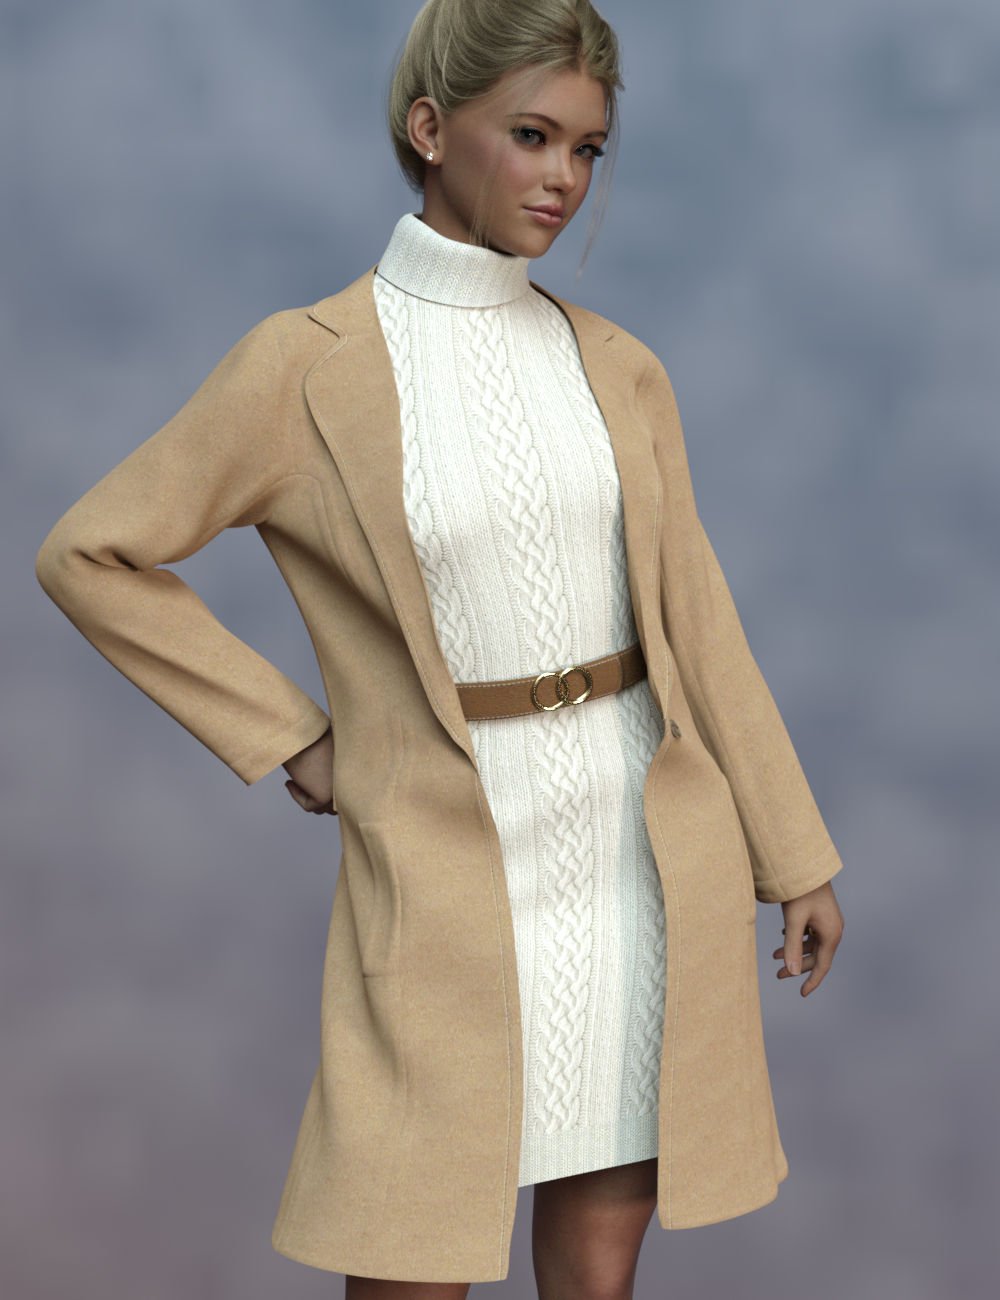 dForce Kenzie Outfit for Genesis 9 by: WildDesignsPandyGirl, 3D Models by Daz 3D